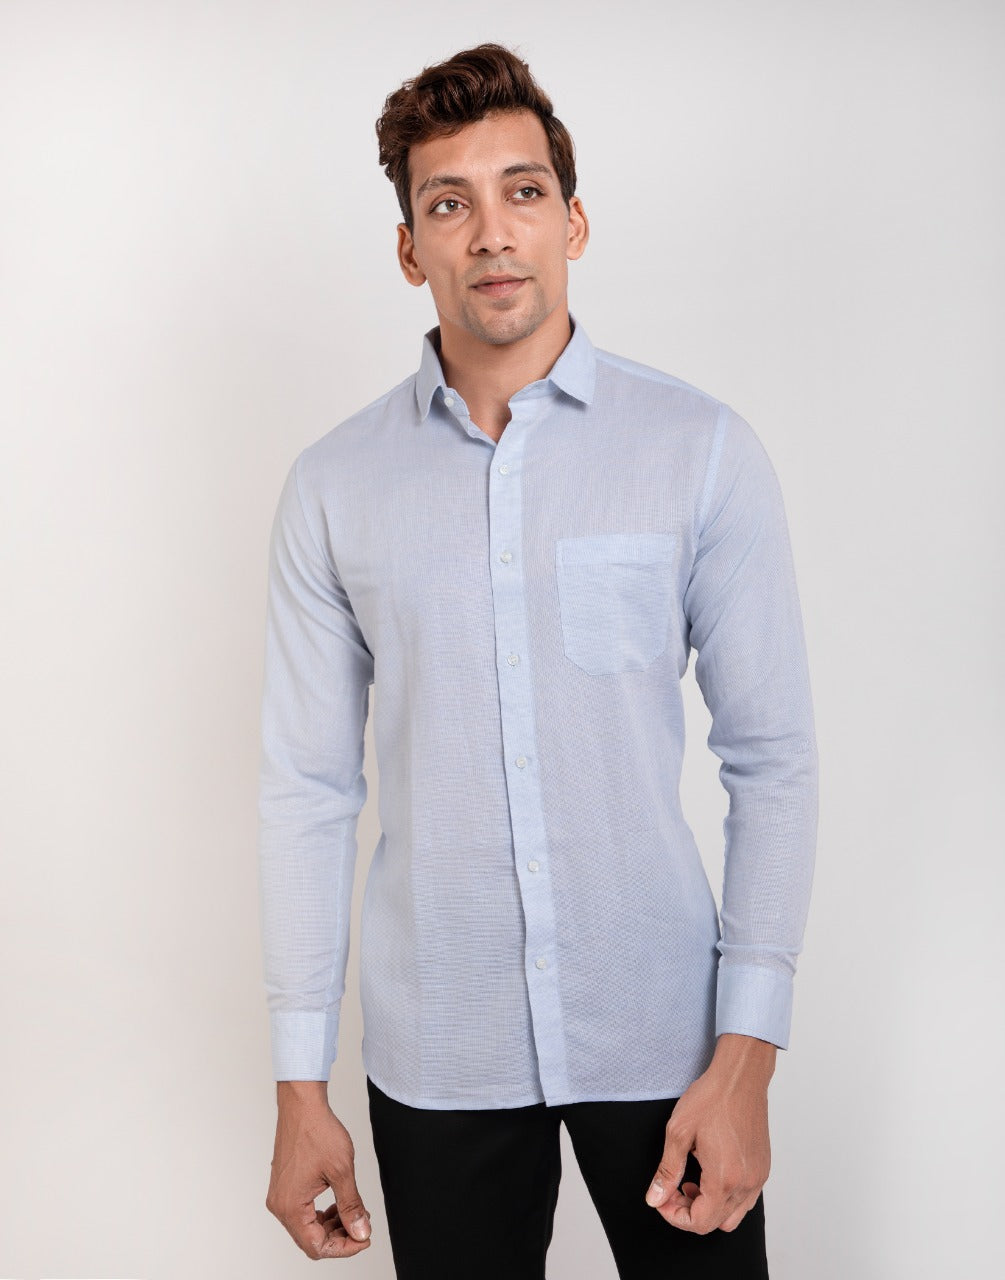 Aqua blue lining weave office wear shirt